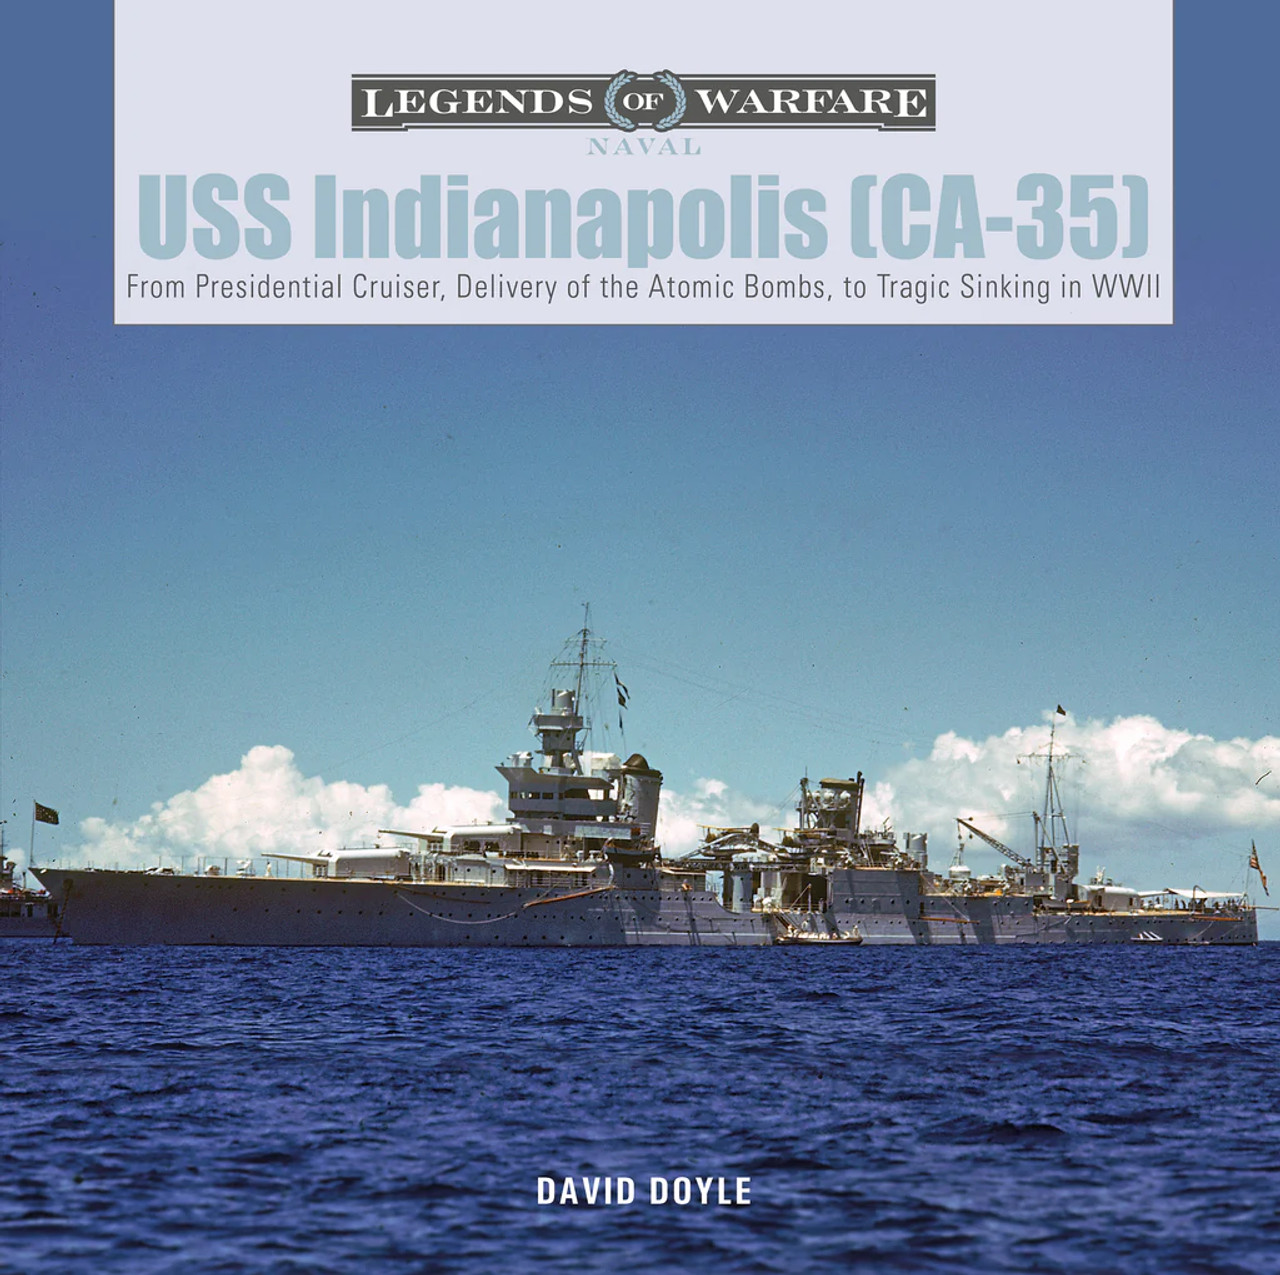 Legends of Warfare: USS Indianapolis (CA-35)